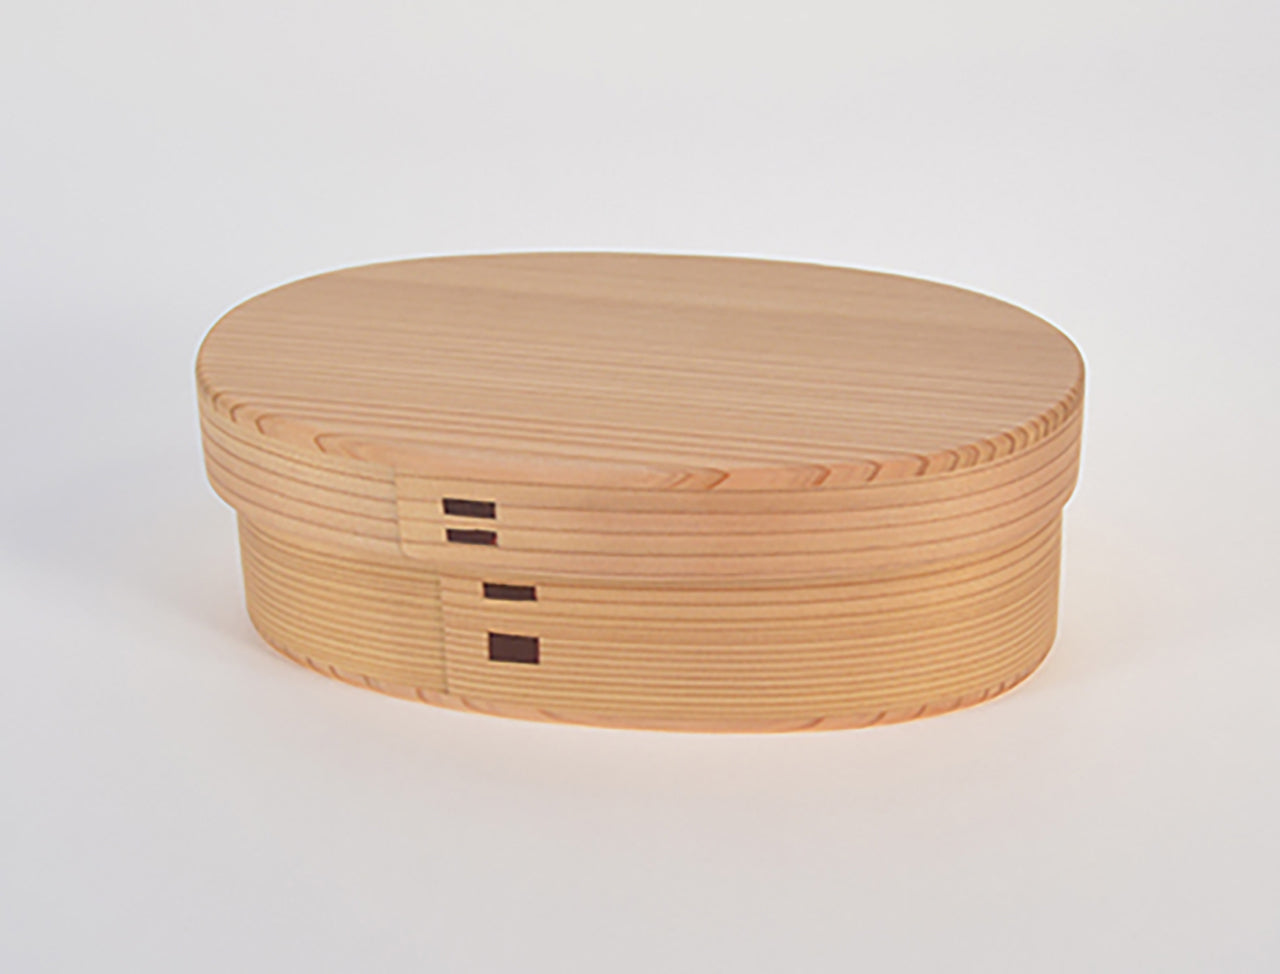 Box, Lunch box Oval, Medium, Bento - Odate bentwood, Wood crafts